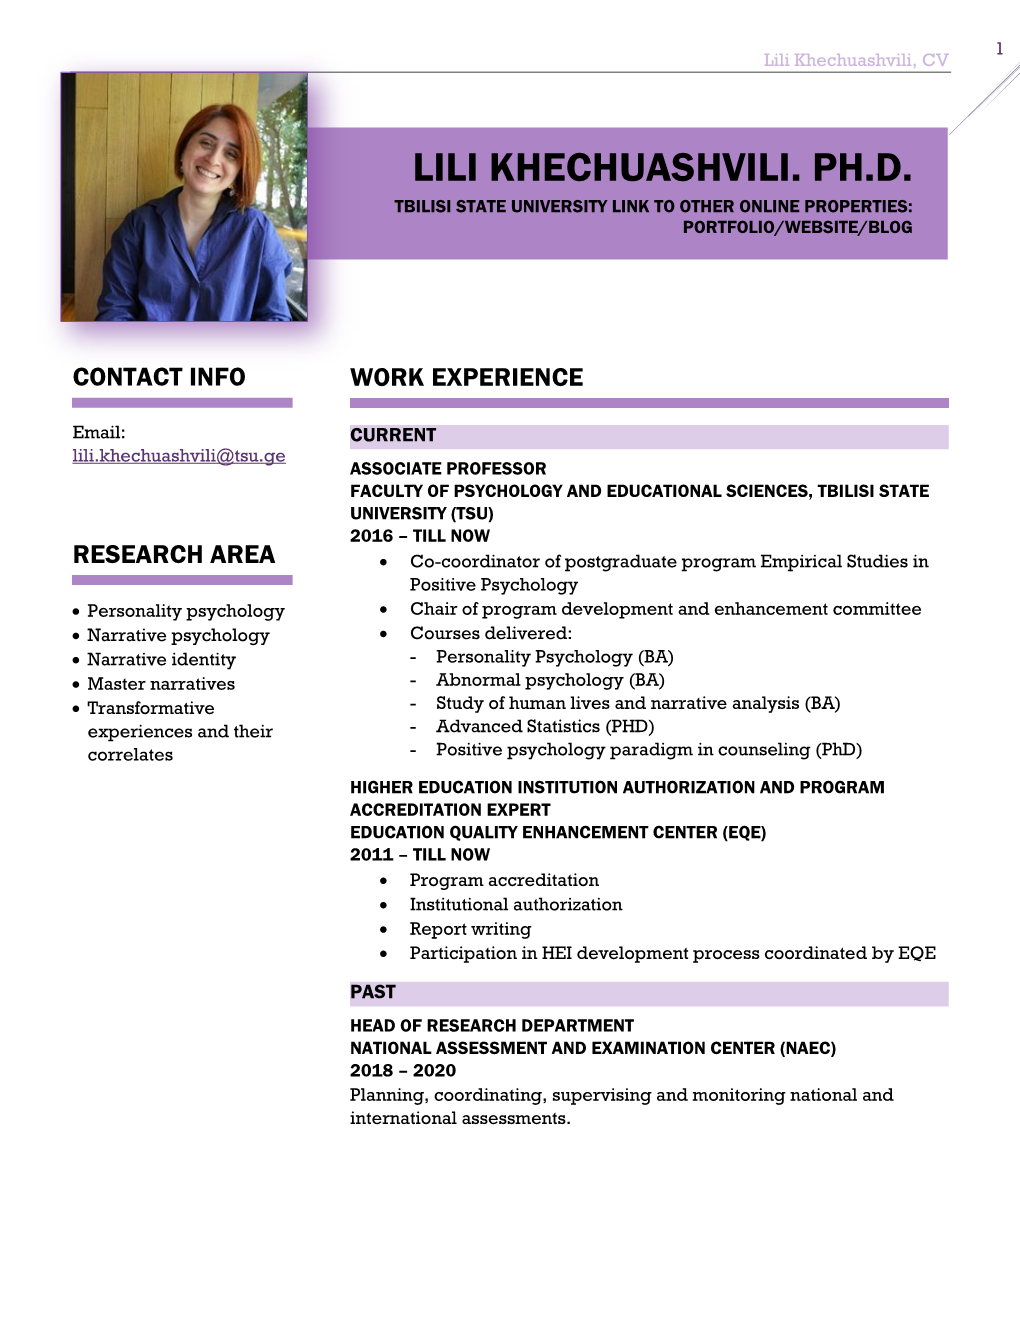 Lili Khechuashvili. Ph.D. Tbilisi State University Link to Other Online Properties: Portfolio/Website/Blog